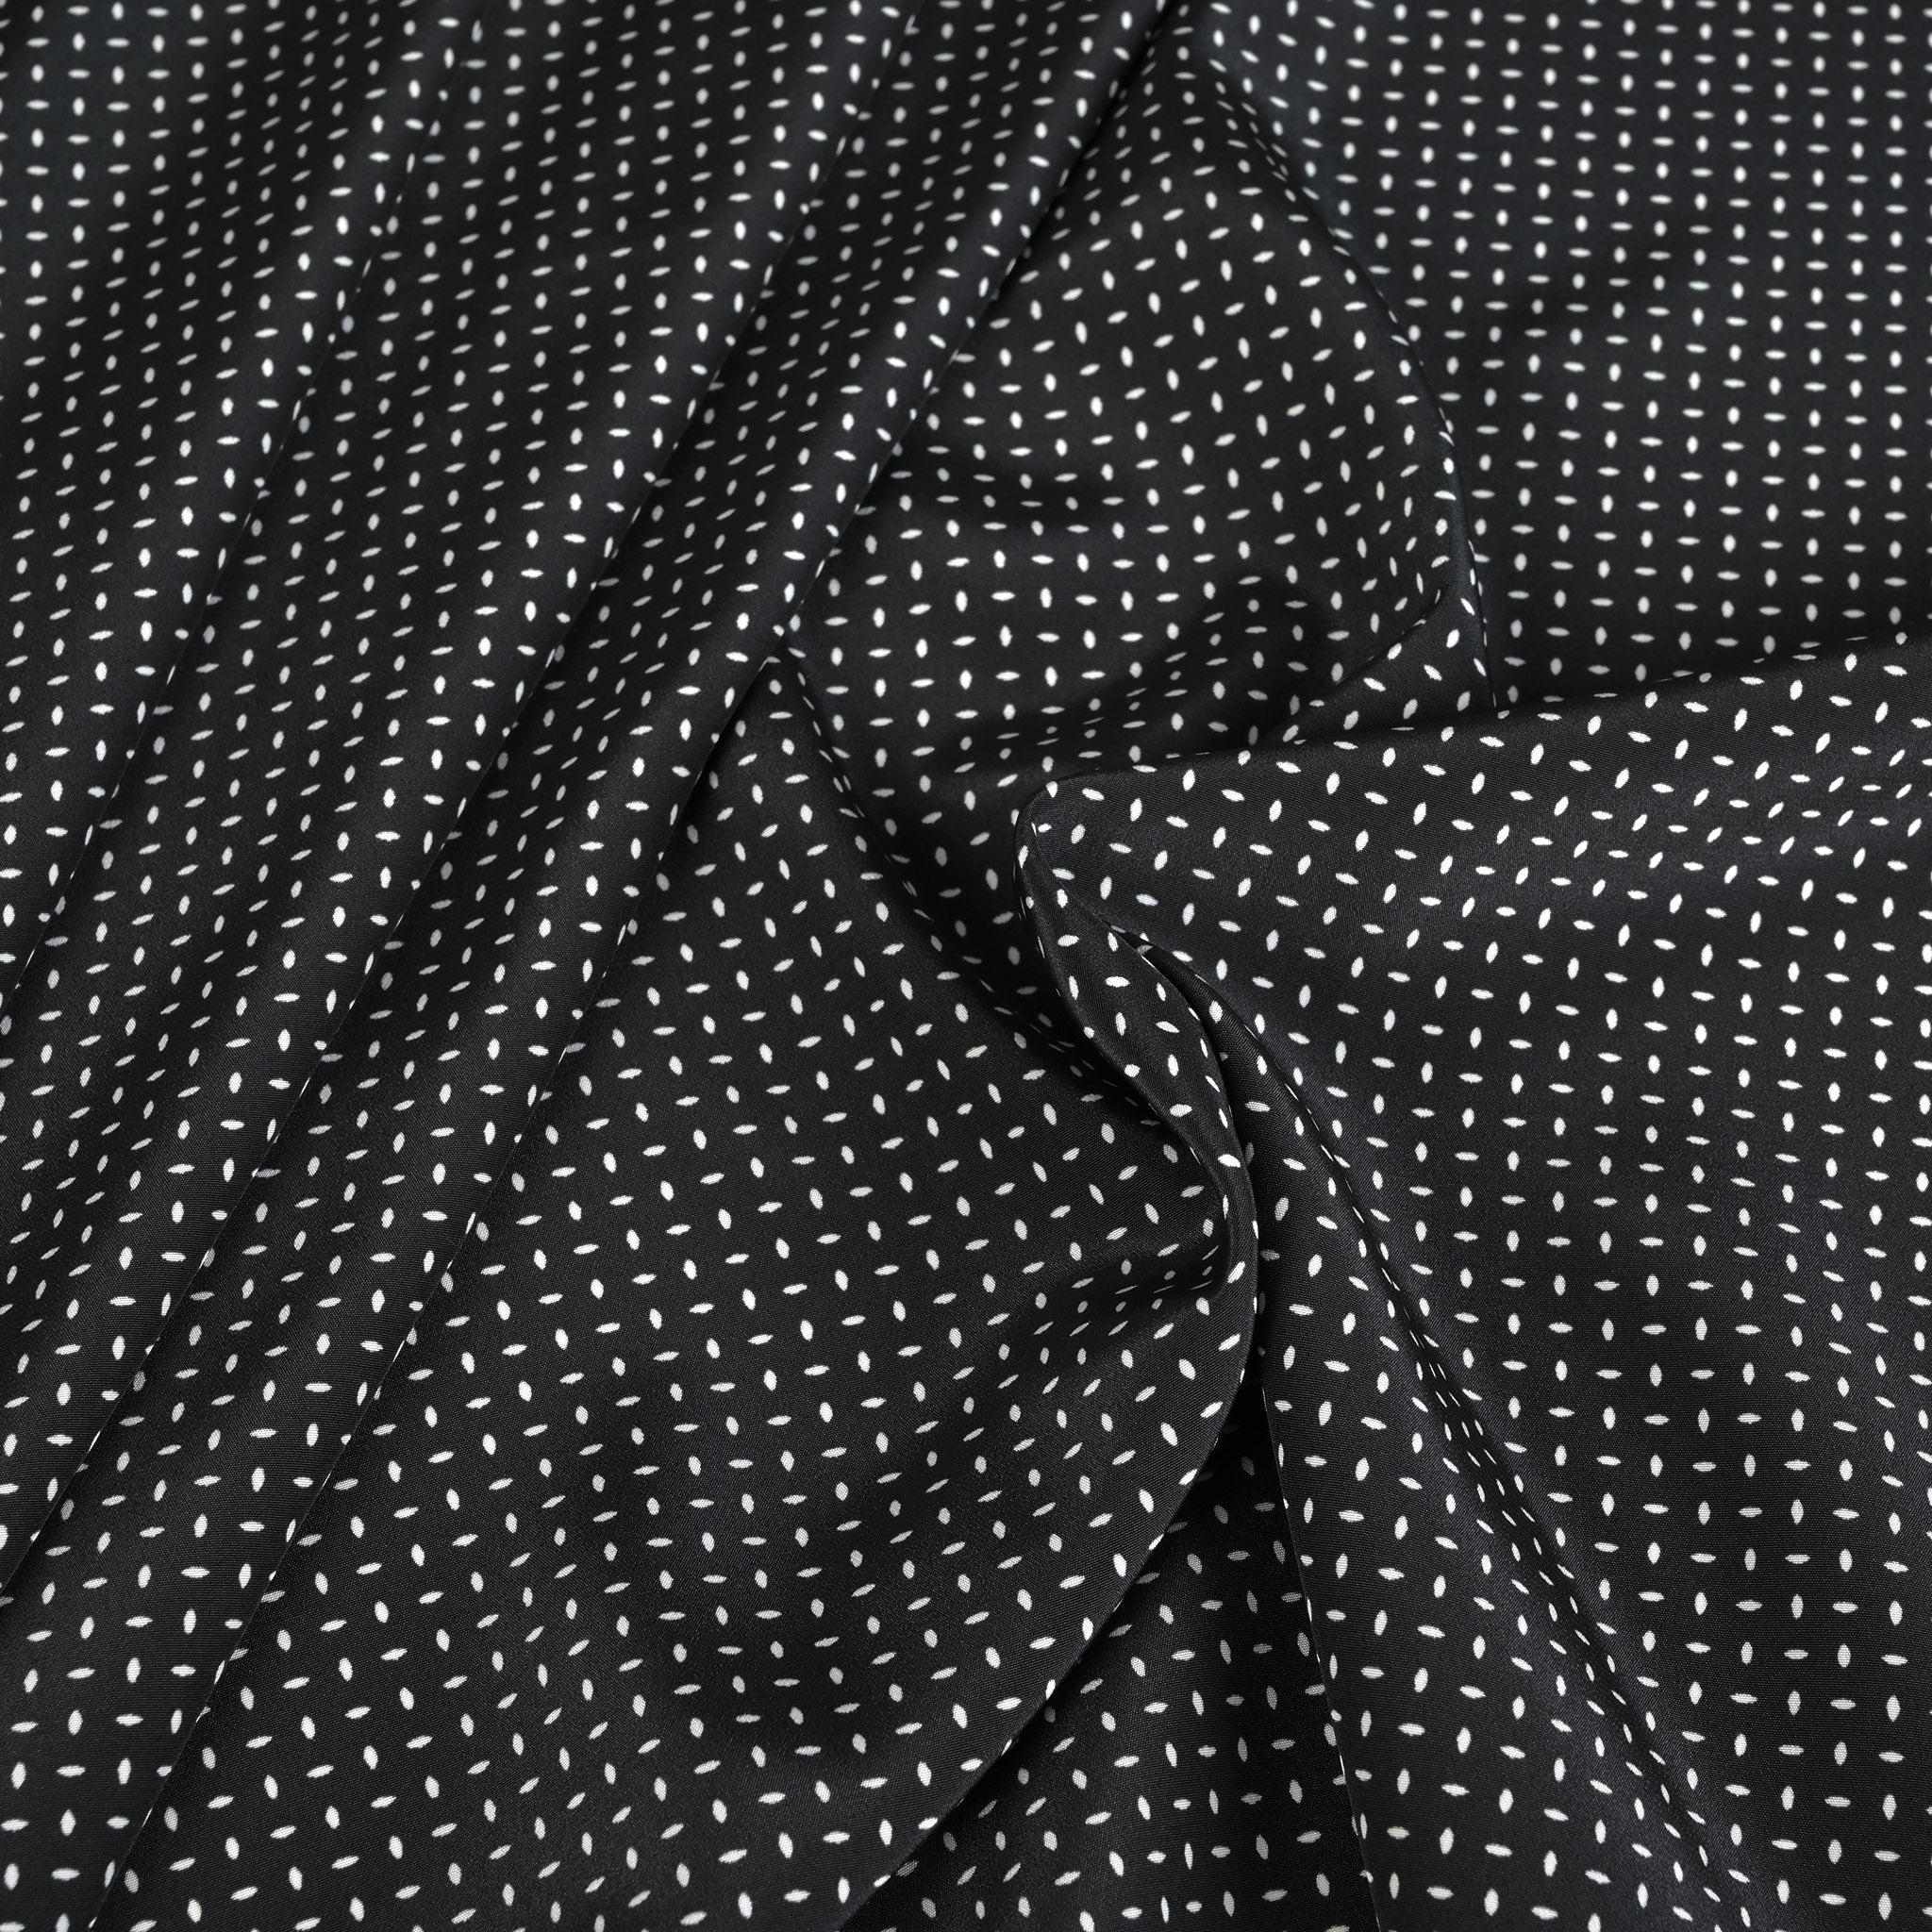 Black Printed Poly Poplin 10 - Fabrics4Fashion